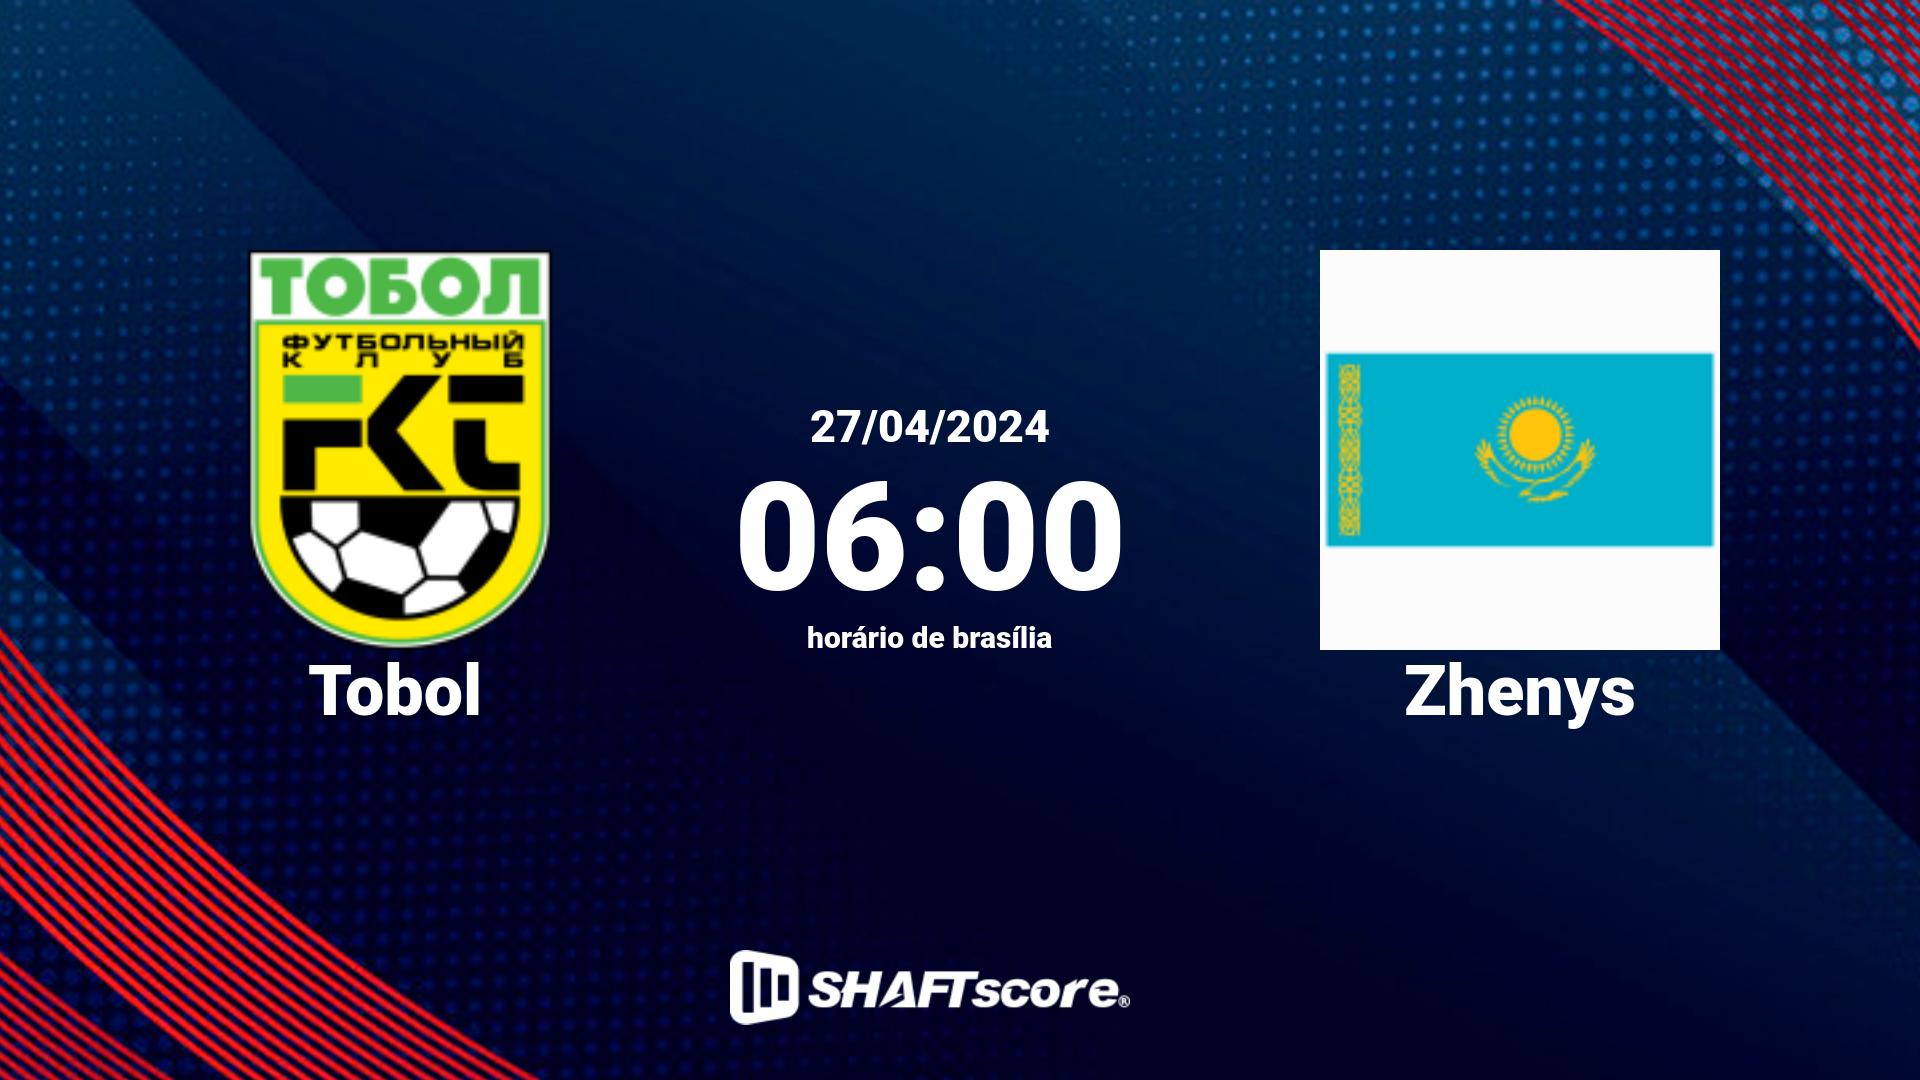 Estatísticas do jogo Tobol vs Zhenys 27.04 06:00